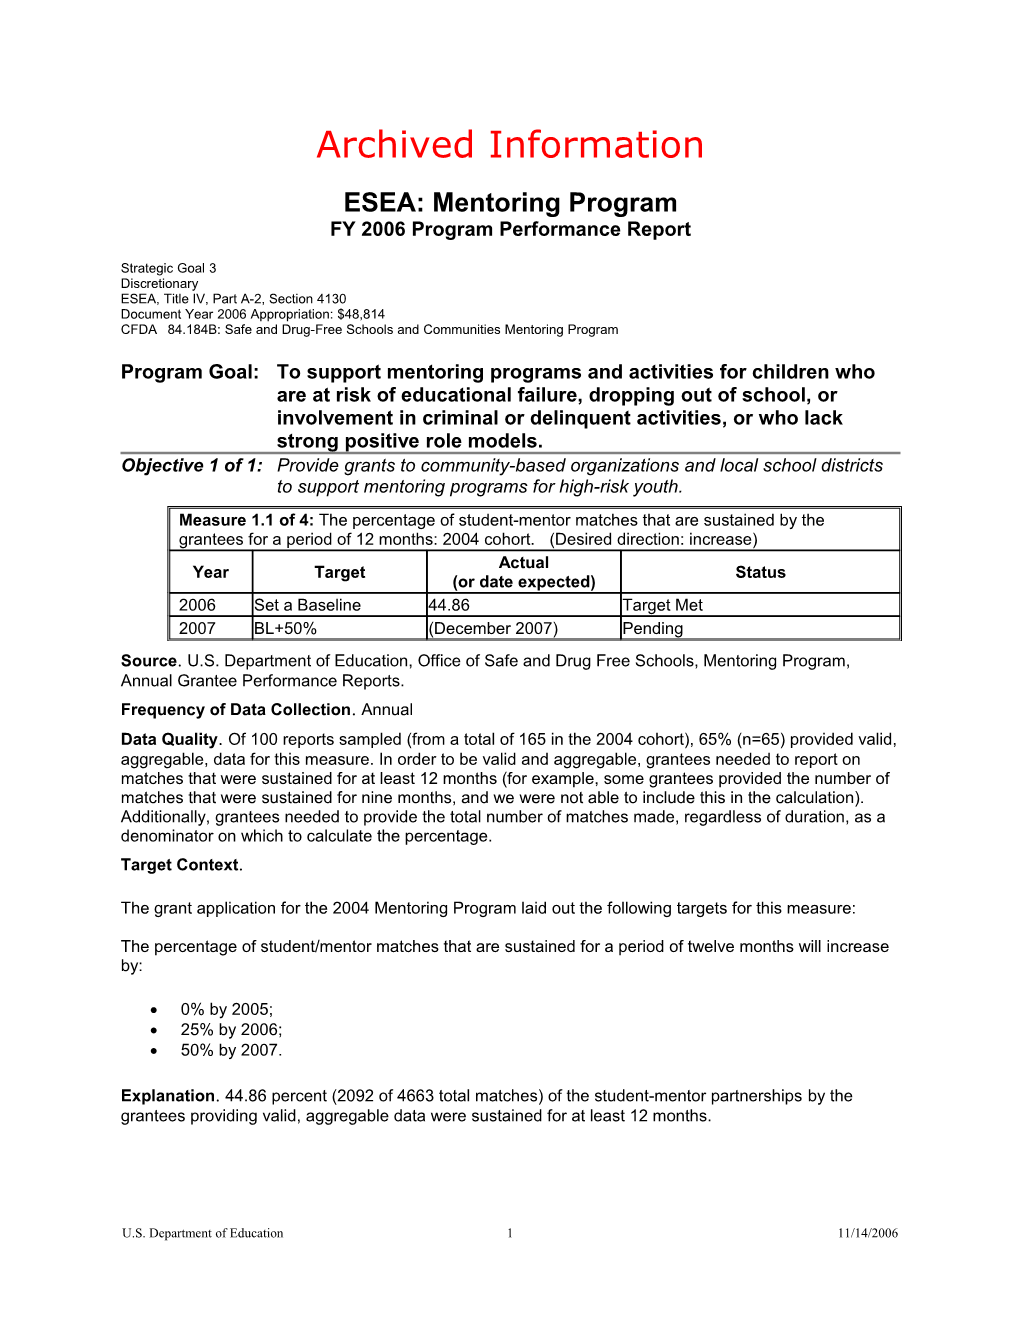 Archived: ESEA: Mentoring Program (MS Word)